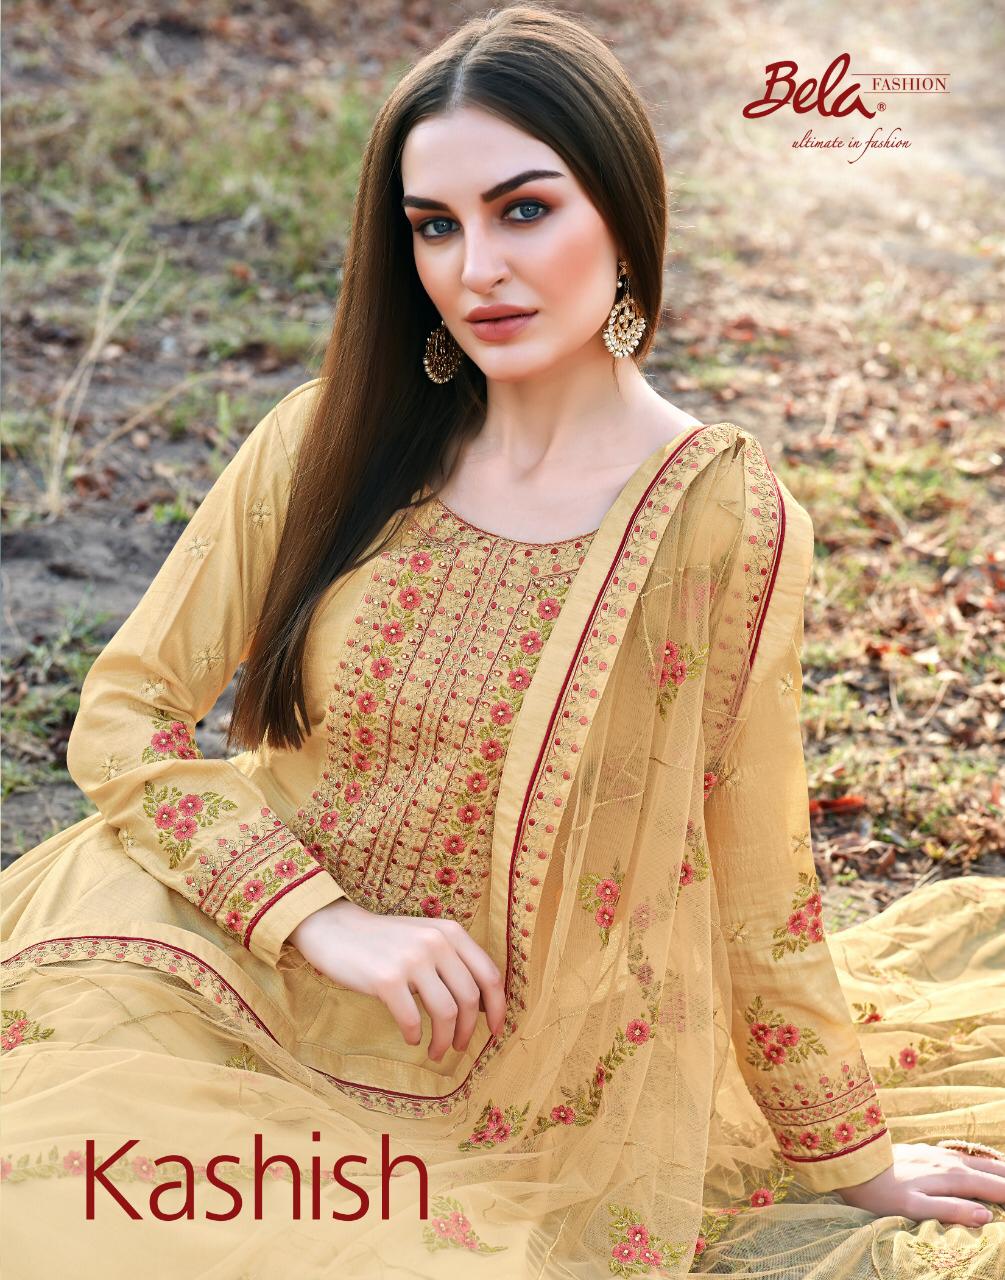 Bela Fashion Kashish Dola Silk Long Gown Style Party Wear Salwar Suits Wholesale Price